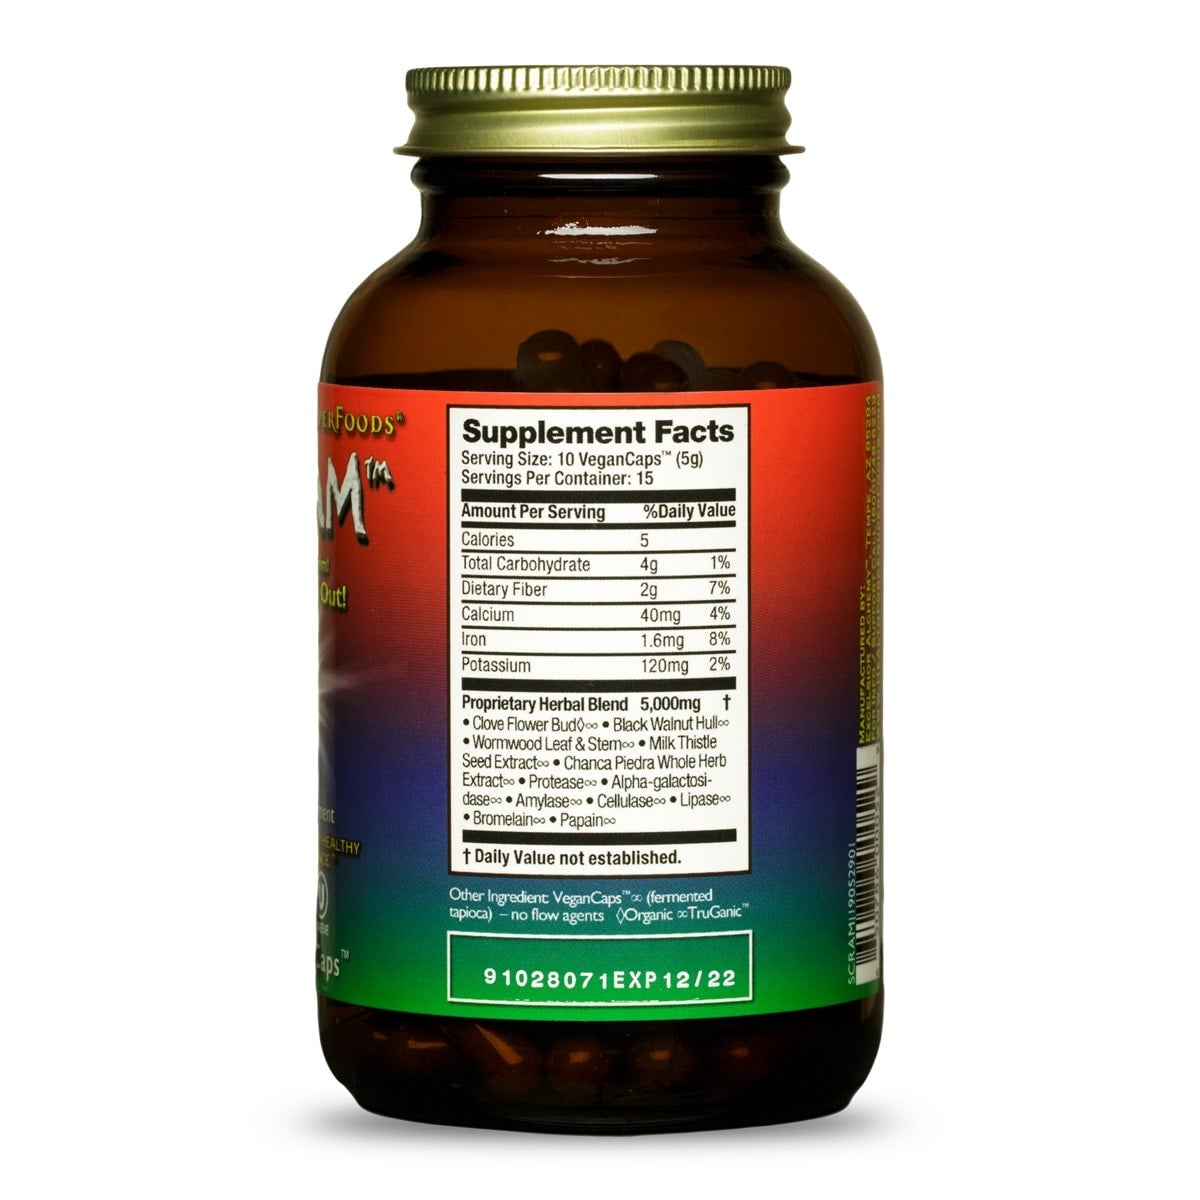 SCRAM™ - Herbal Microbial &amp; Detox Support Nahrungsergänzungsmittel heal - Genuine Selection